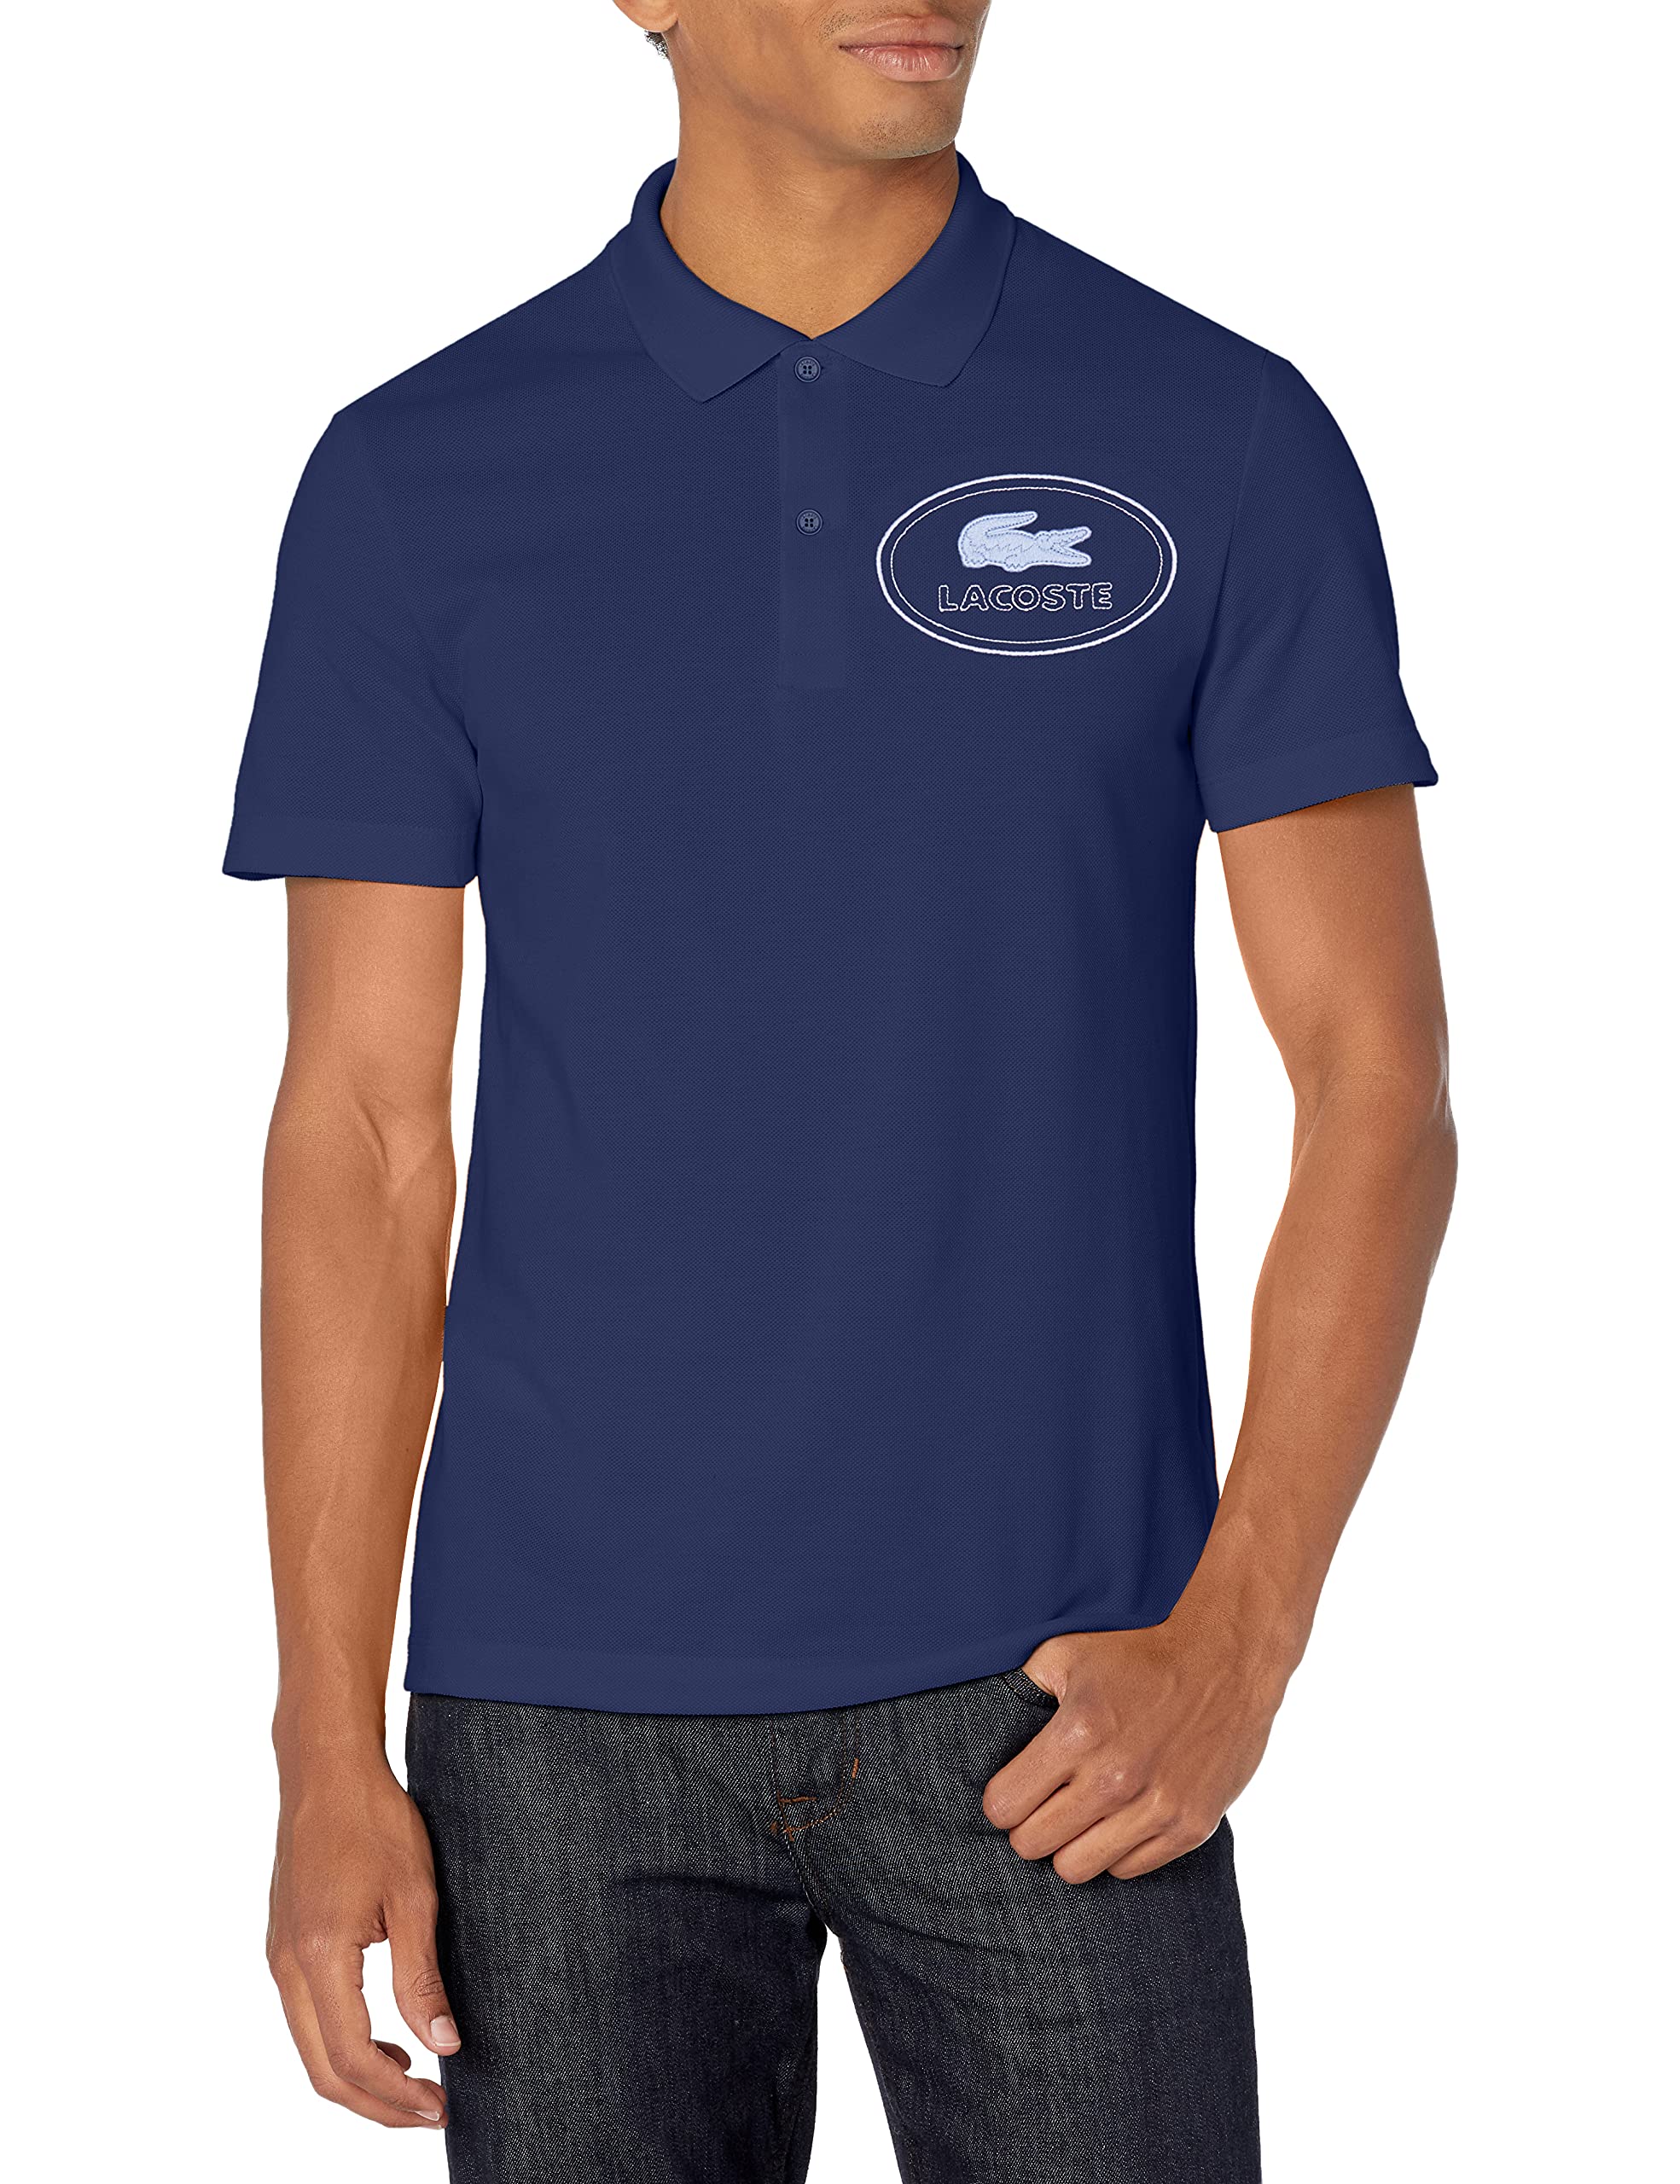 Lacoste Mens Short Sleeve Slim Fit Tonal Croc Graphic Polo Shirt Deauville Blue 3XL